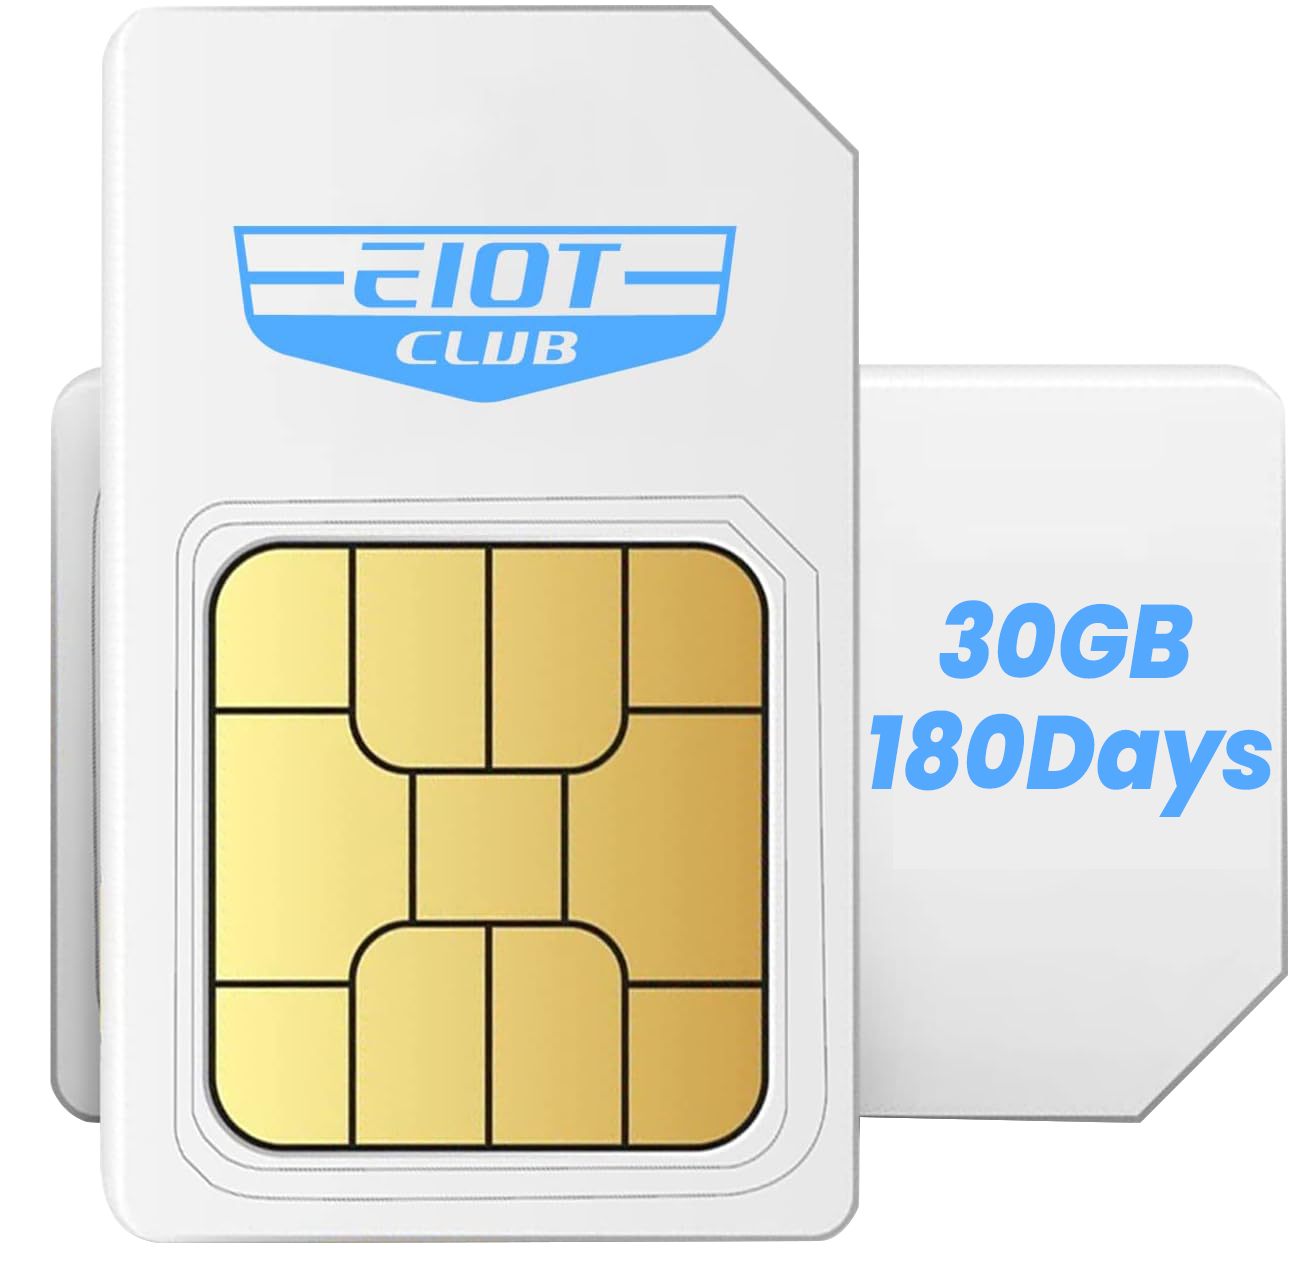 UBox EIOTCLUB SIM card data - 6 month 30GB